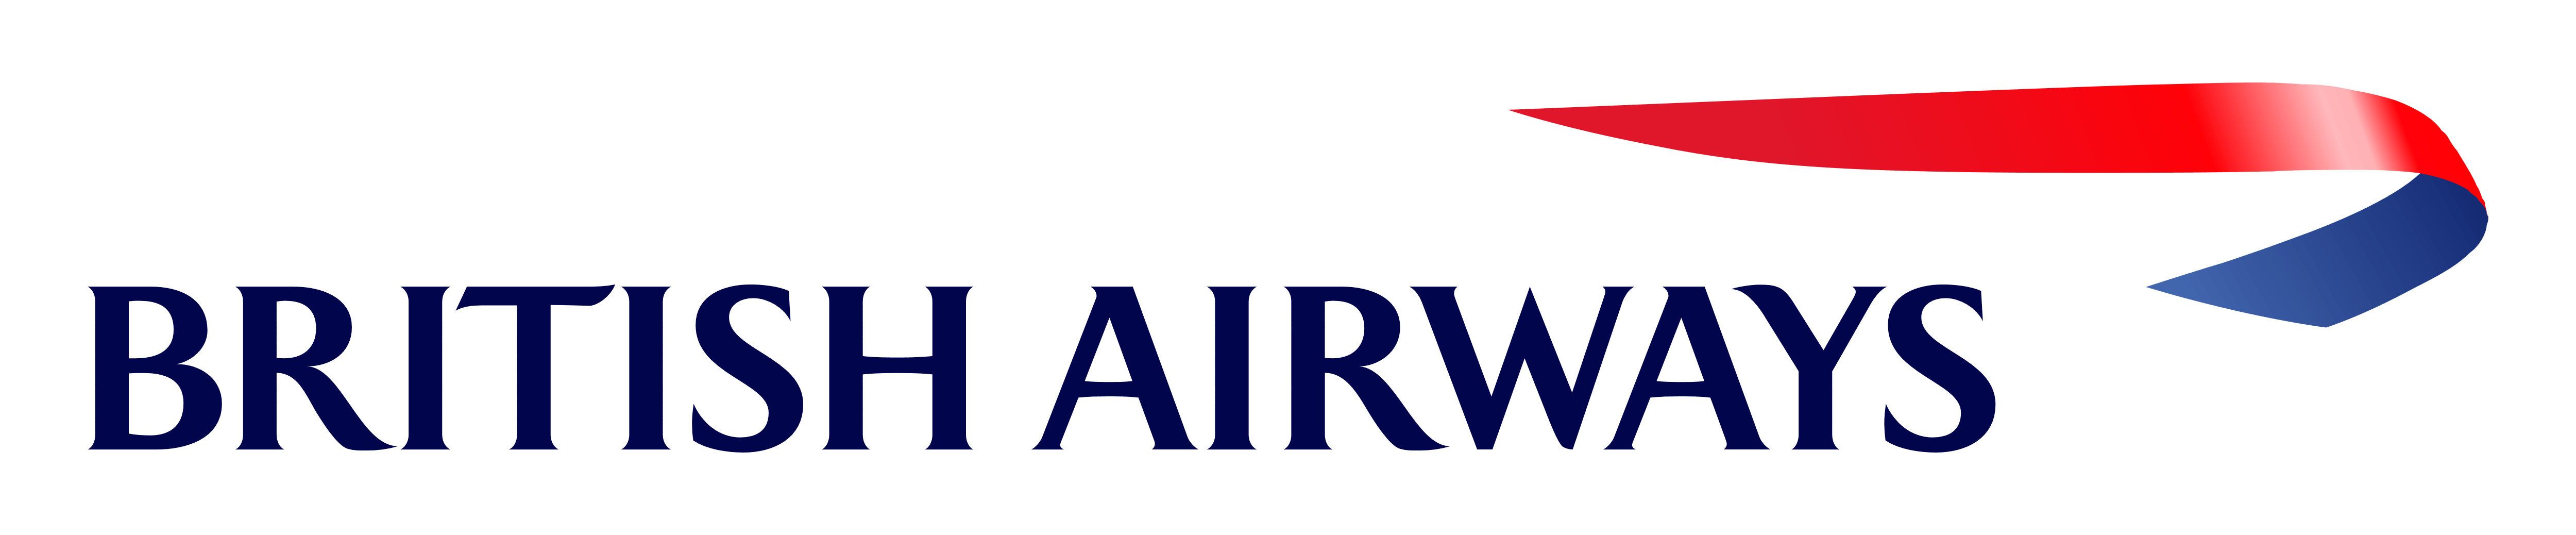 British Airlines Logo - British Airways – Logos Download